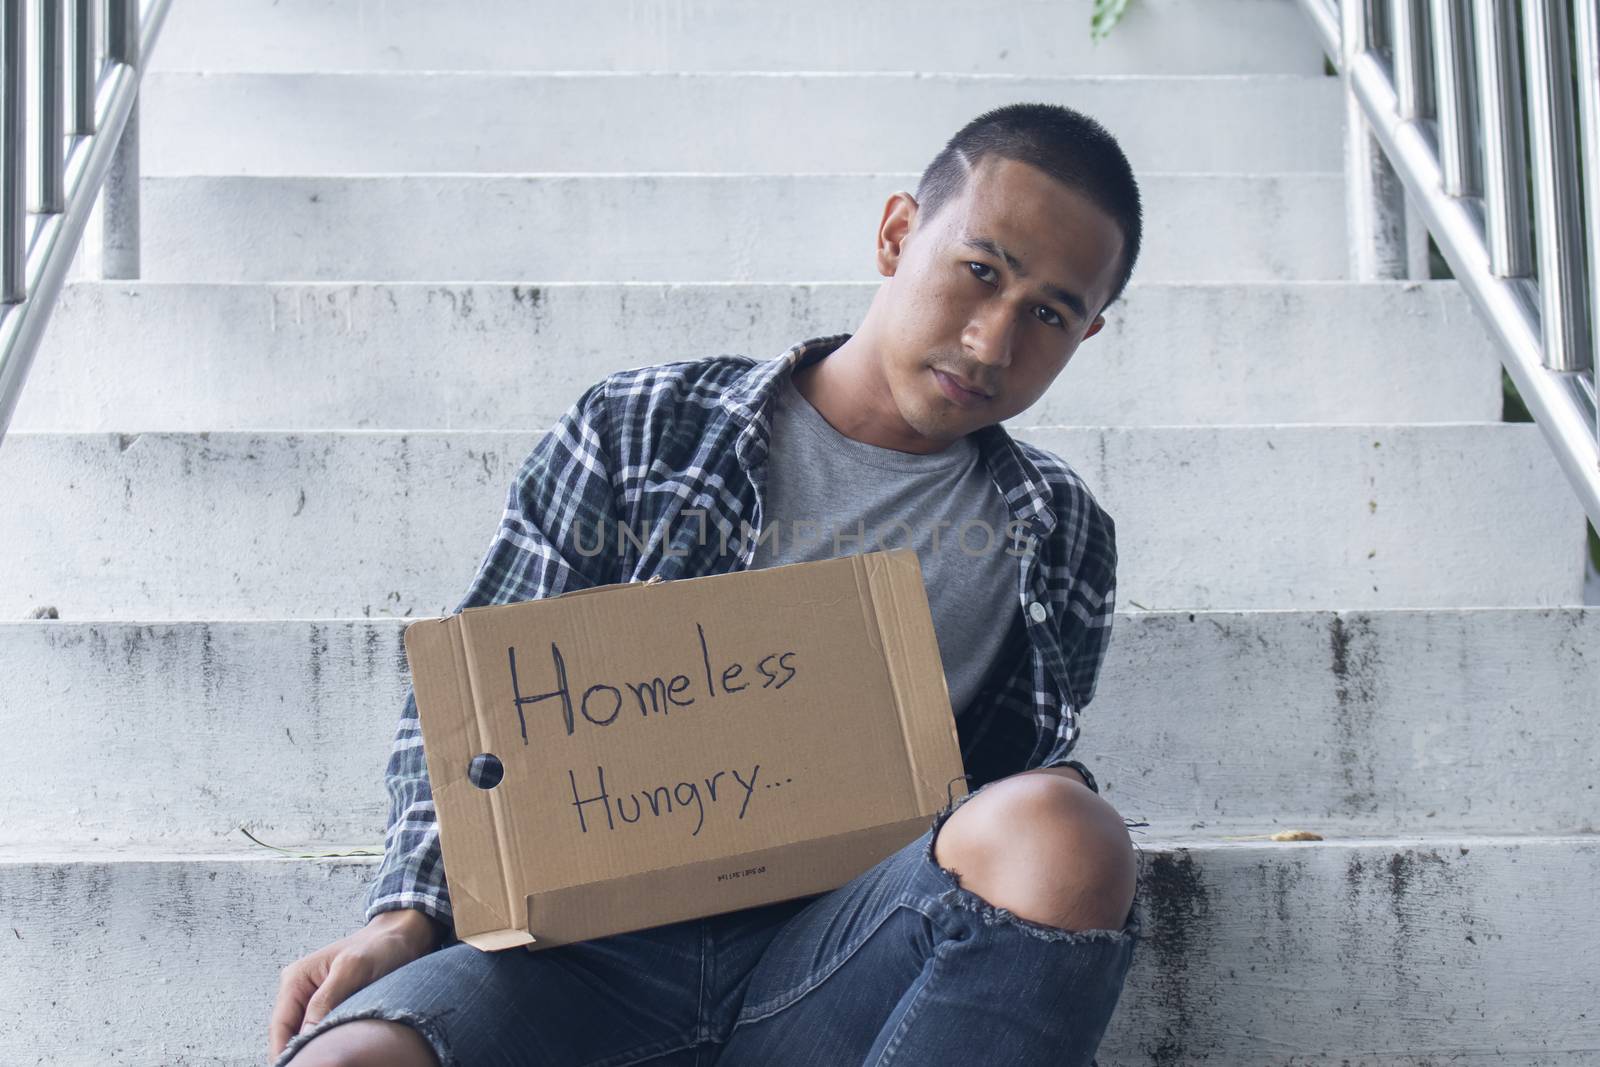 Unhappy homeless man by Gobba17